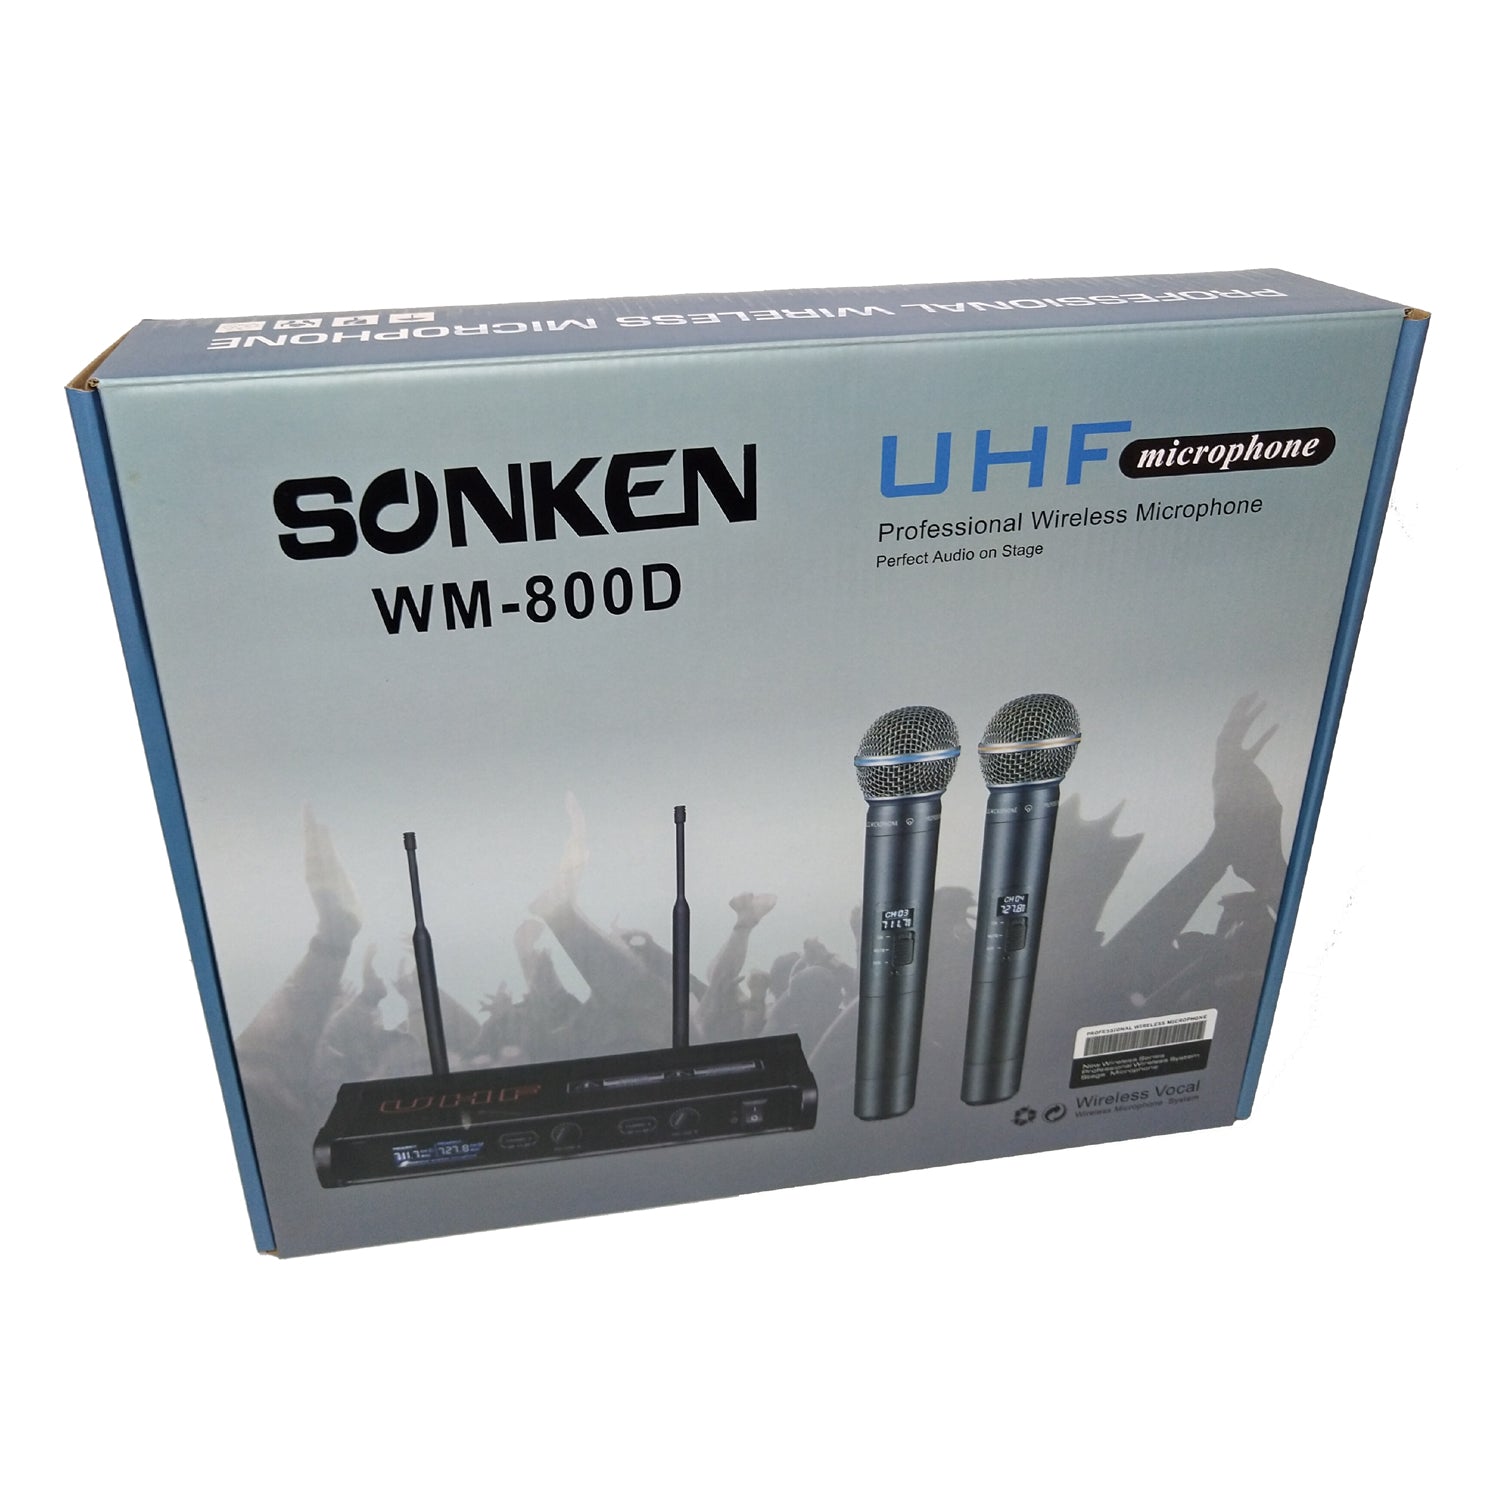 Sonken WM-800D Pro UHF Wireless Microphones (2) and Receiver Unit - Karaoke Home Entertainment